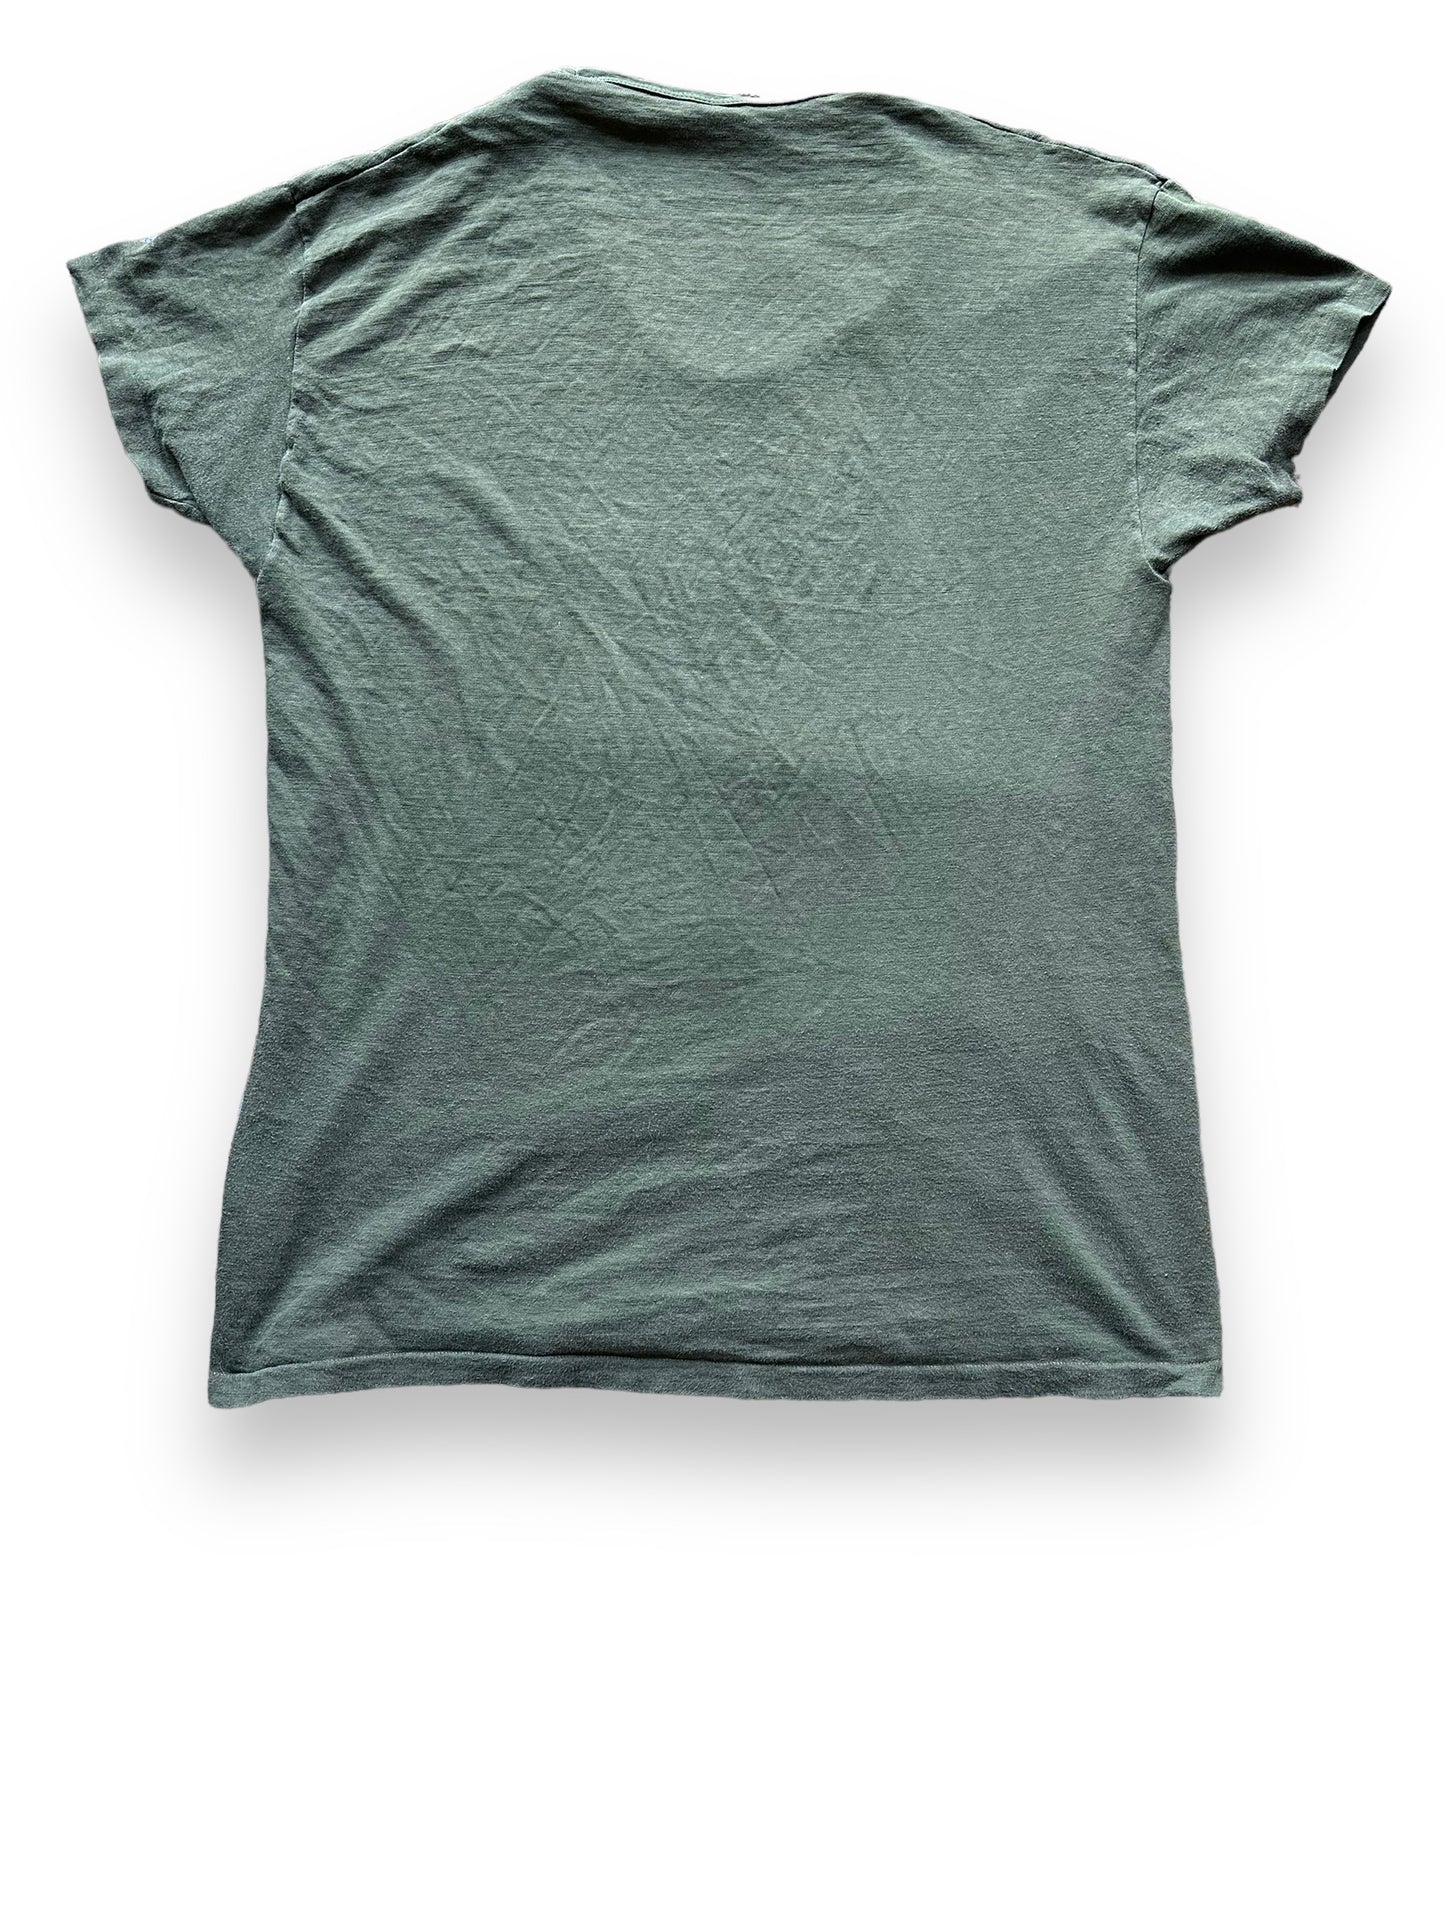 Rear View of Vintage Green Hanes Blank Tee SZ XL | Vintage Blank T-Shirts Seattle | Barn Owl Vintage Tees Seattle